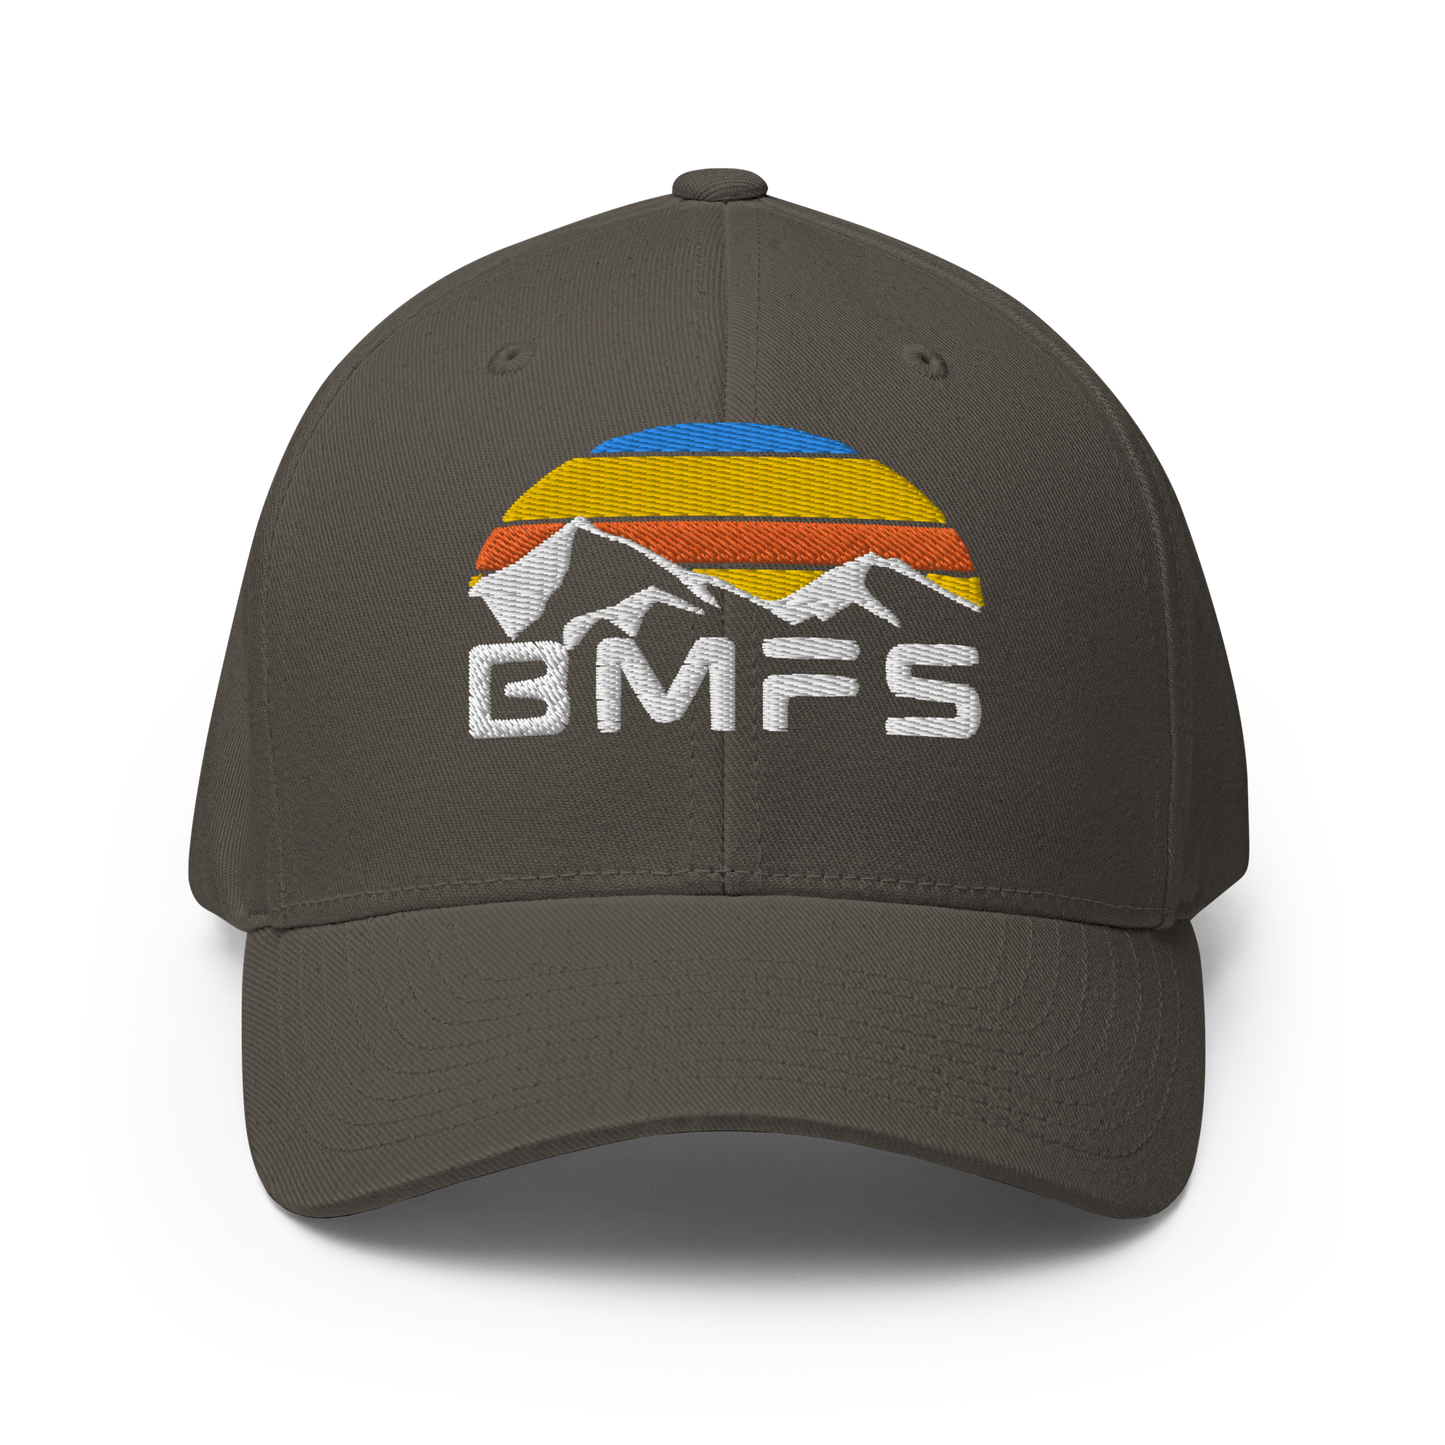 BMFS Mountains FlexFit Structured Twill Cap | BMFS 33 Inspired Cap